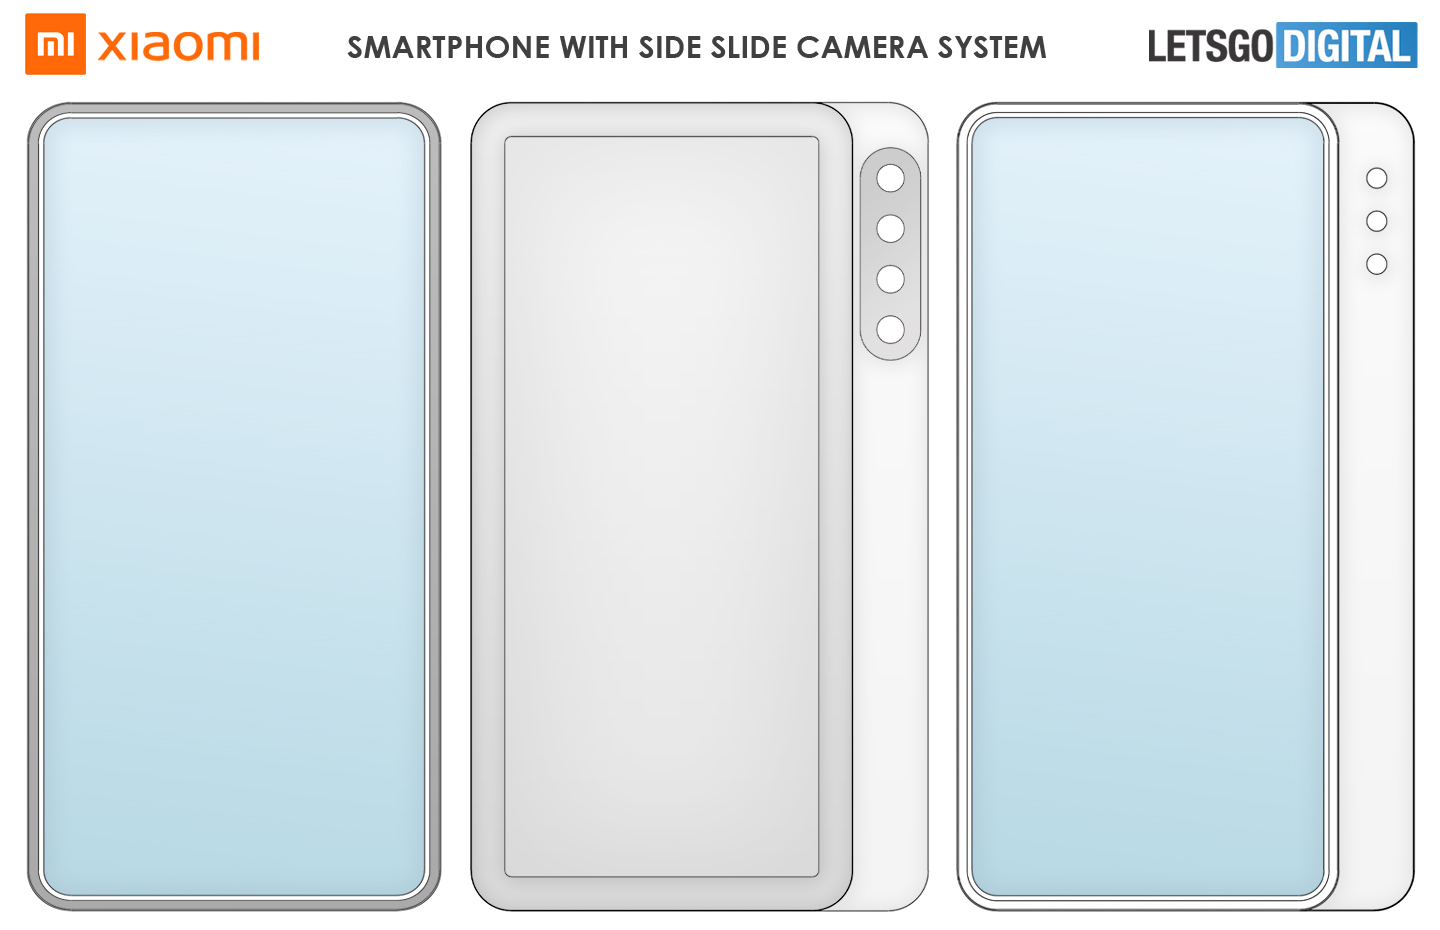 Xiaomi side slide smartphone